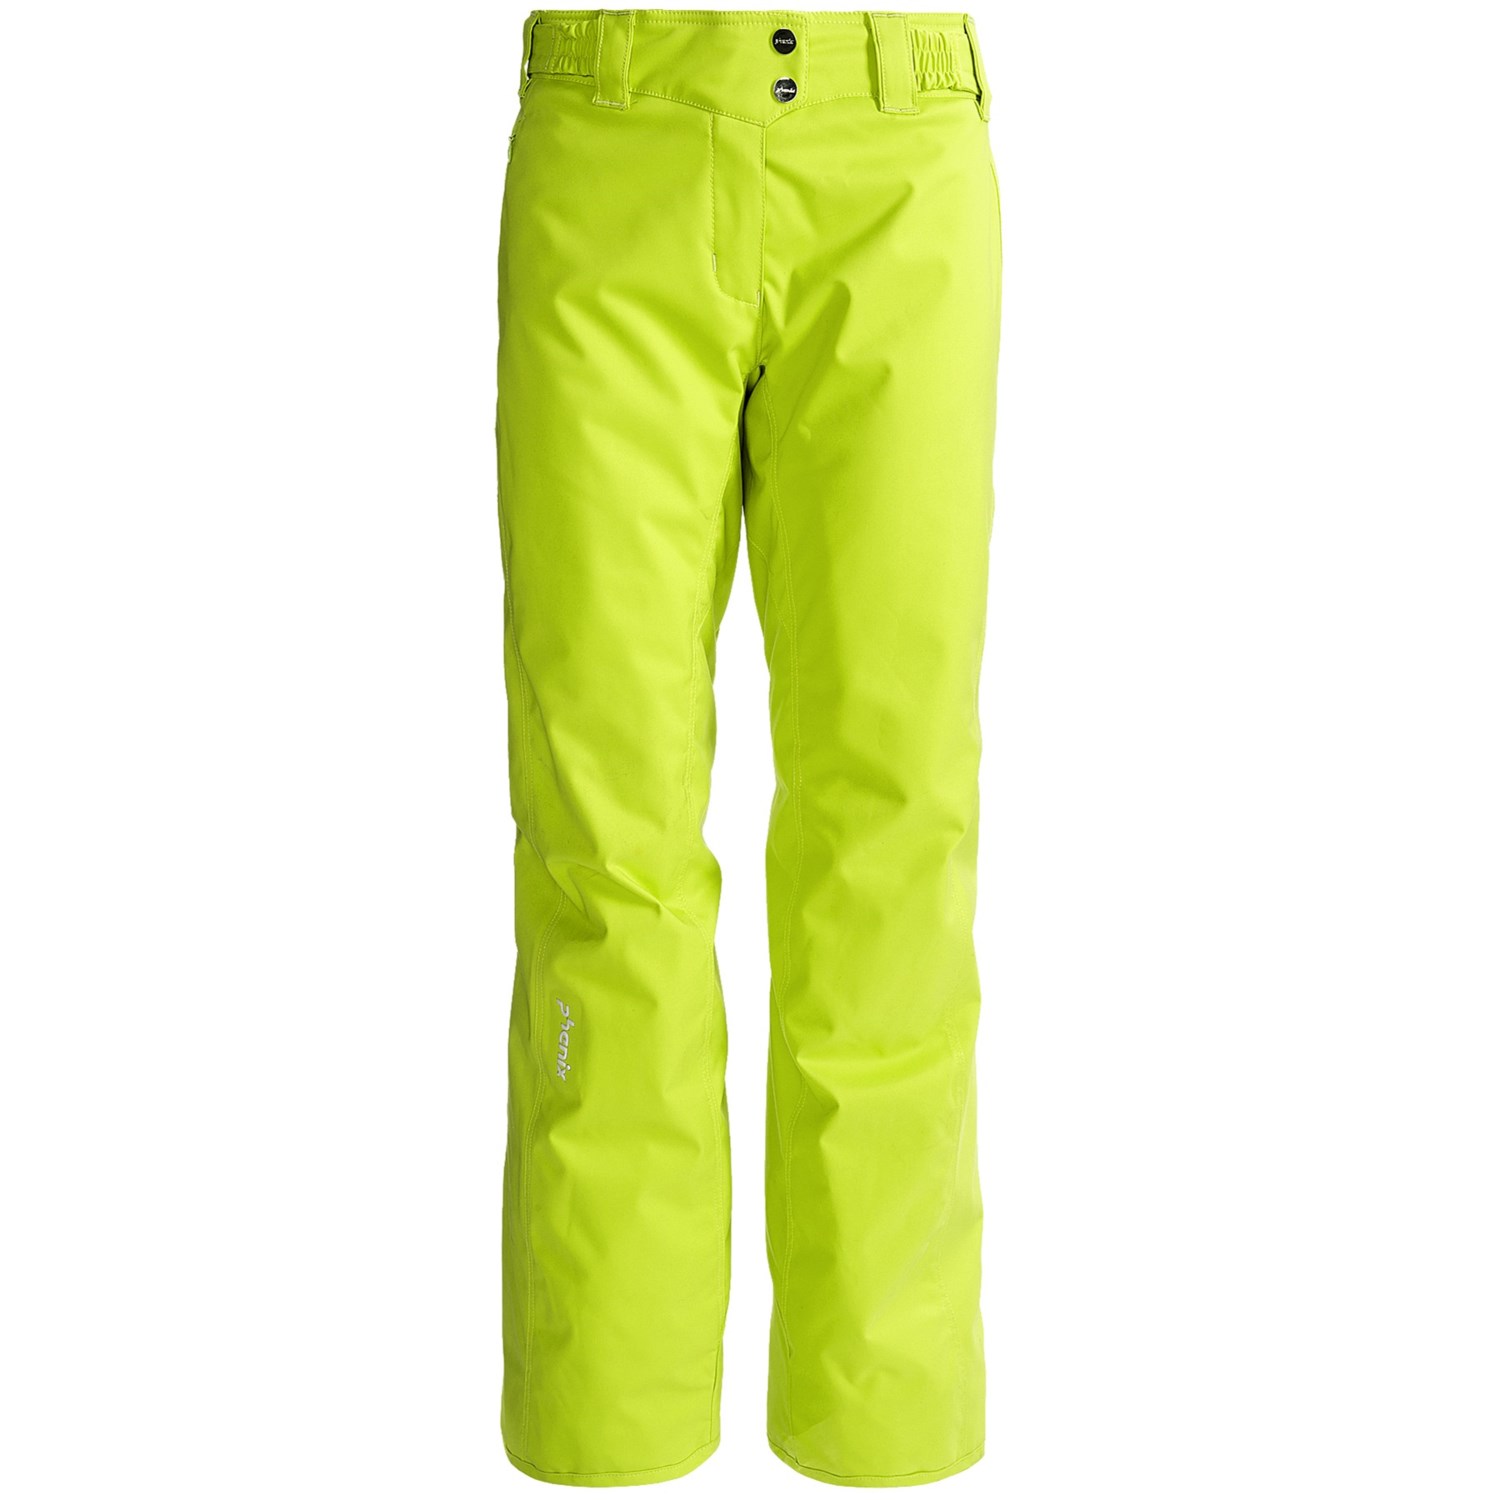 Phenix Orca Waist Ski Pants - Insulated (For Women) - Save 30%